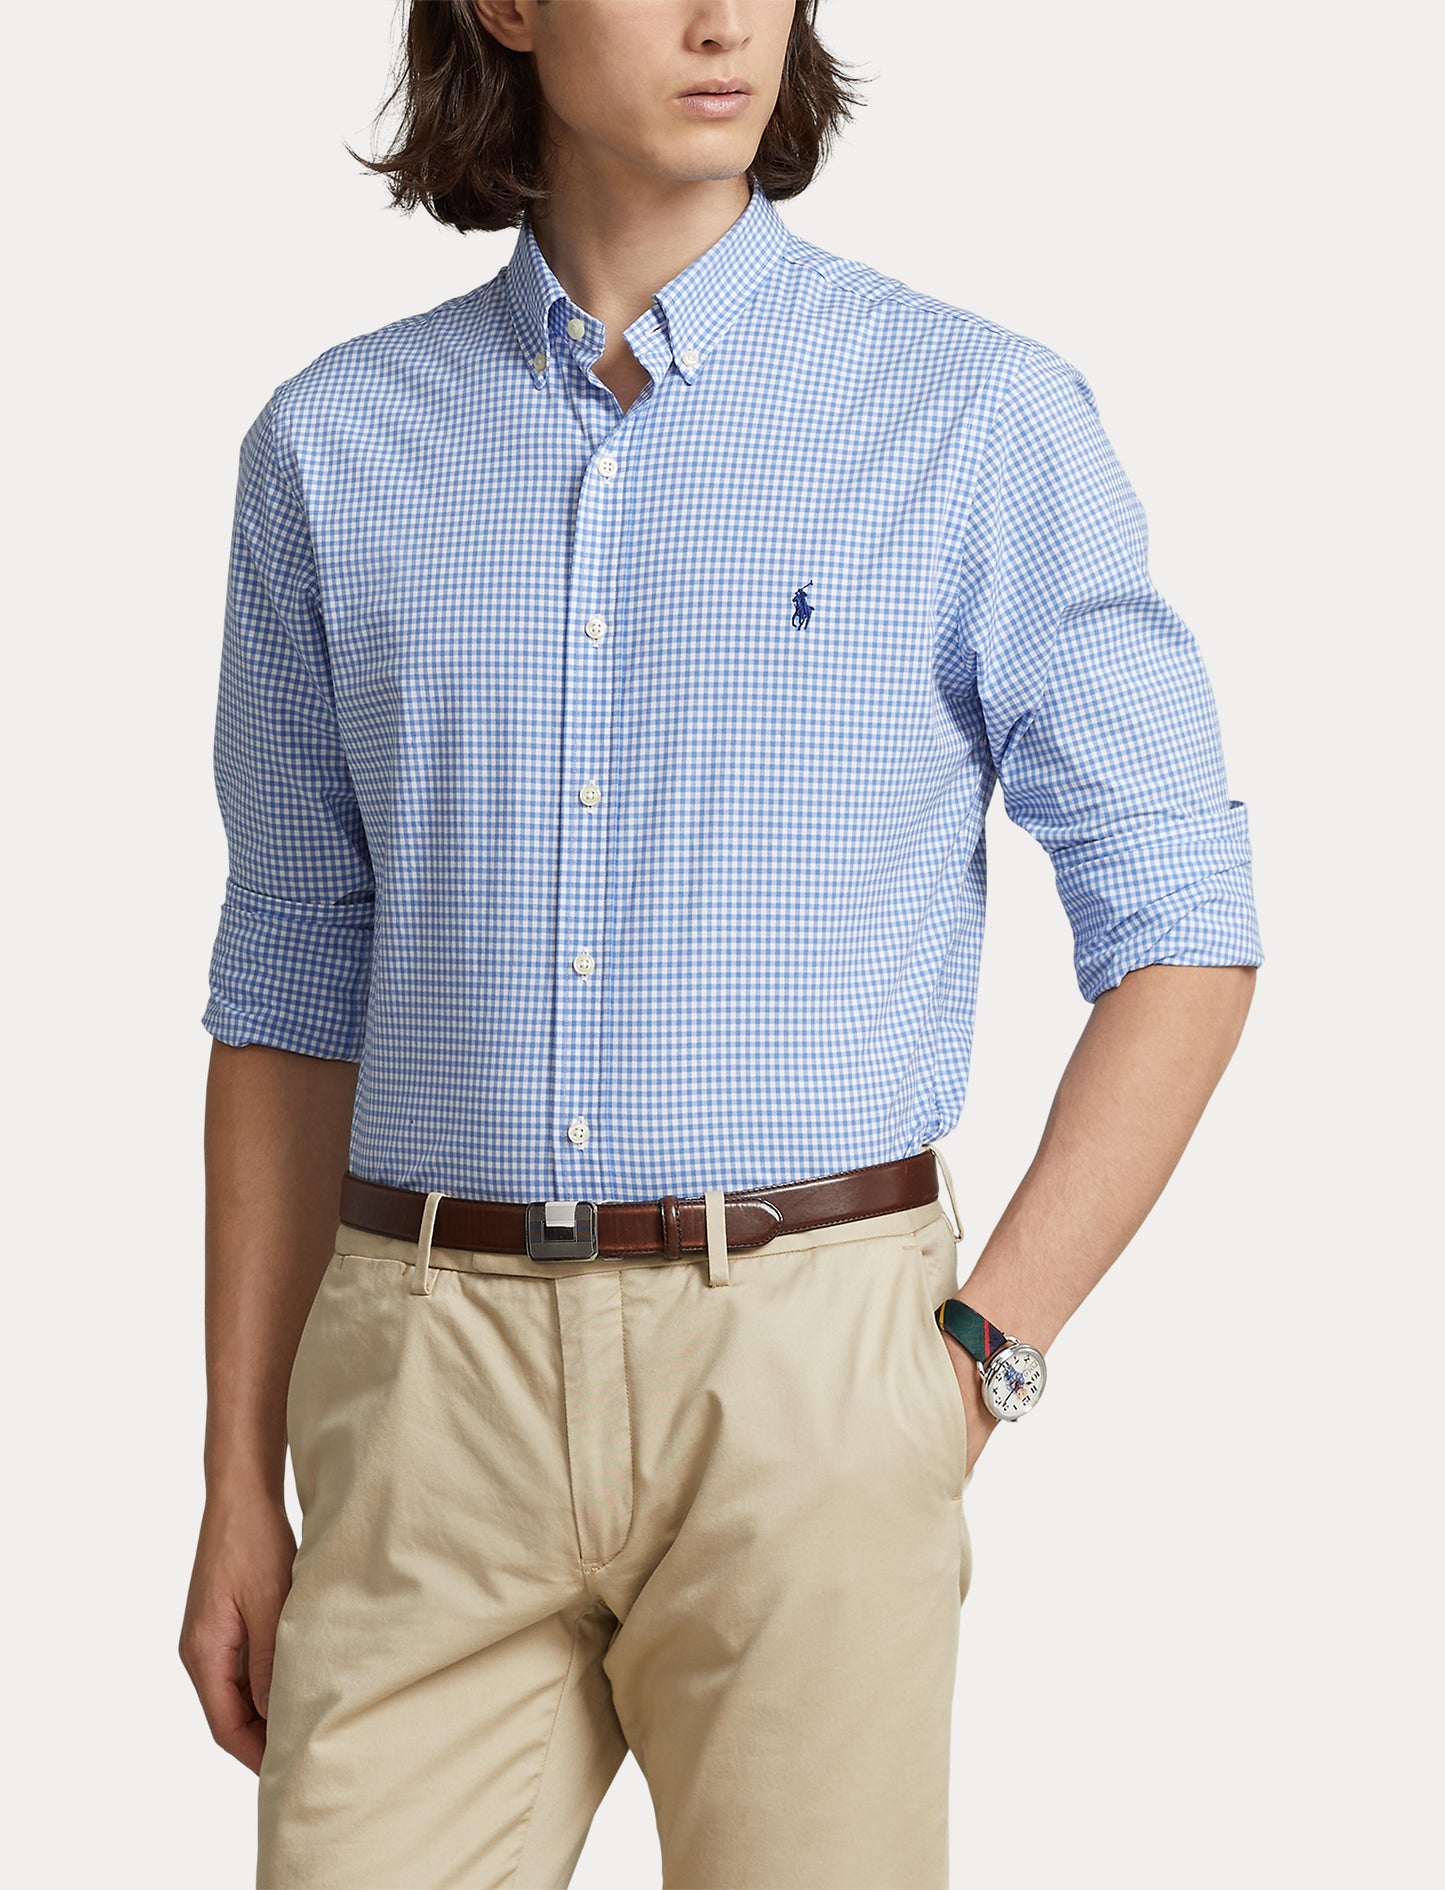 Polo Ralph Lauren Custom Fit Poplin Shirt Blue/Wht